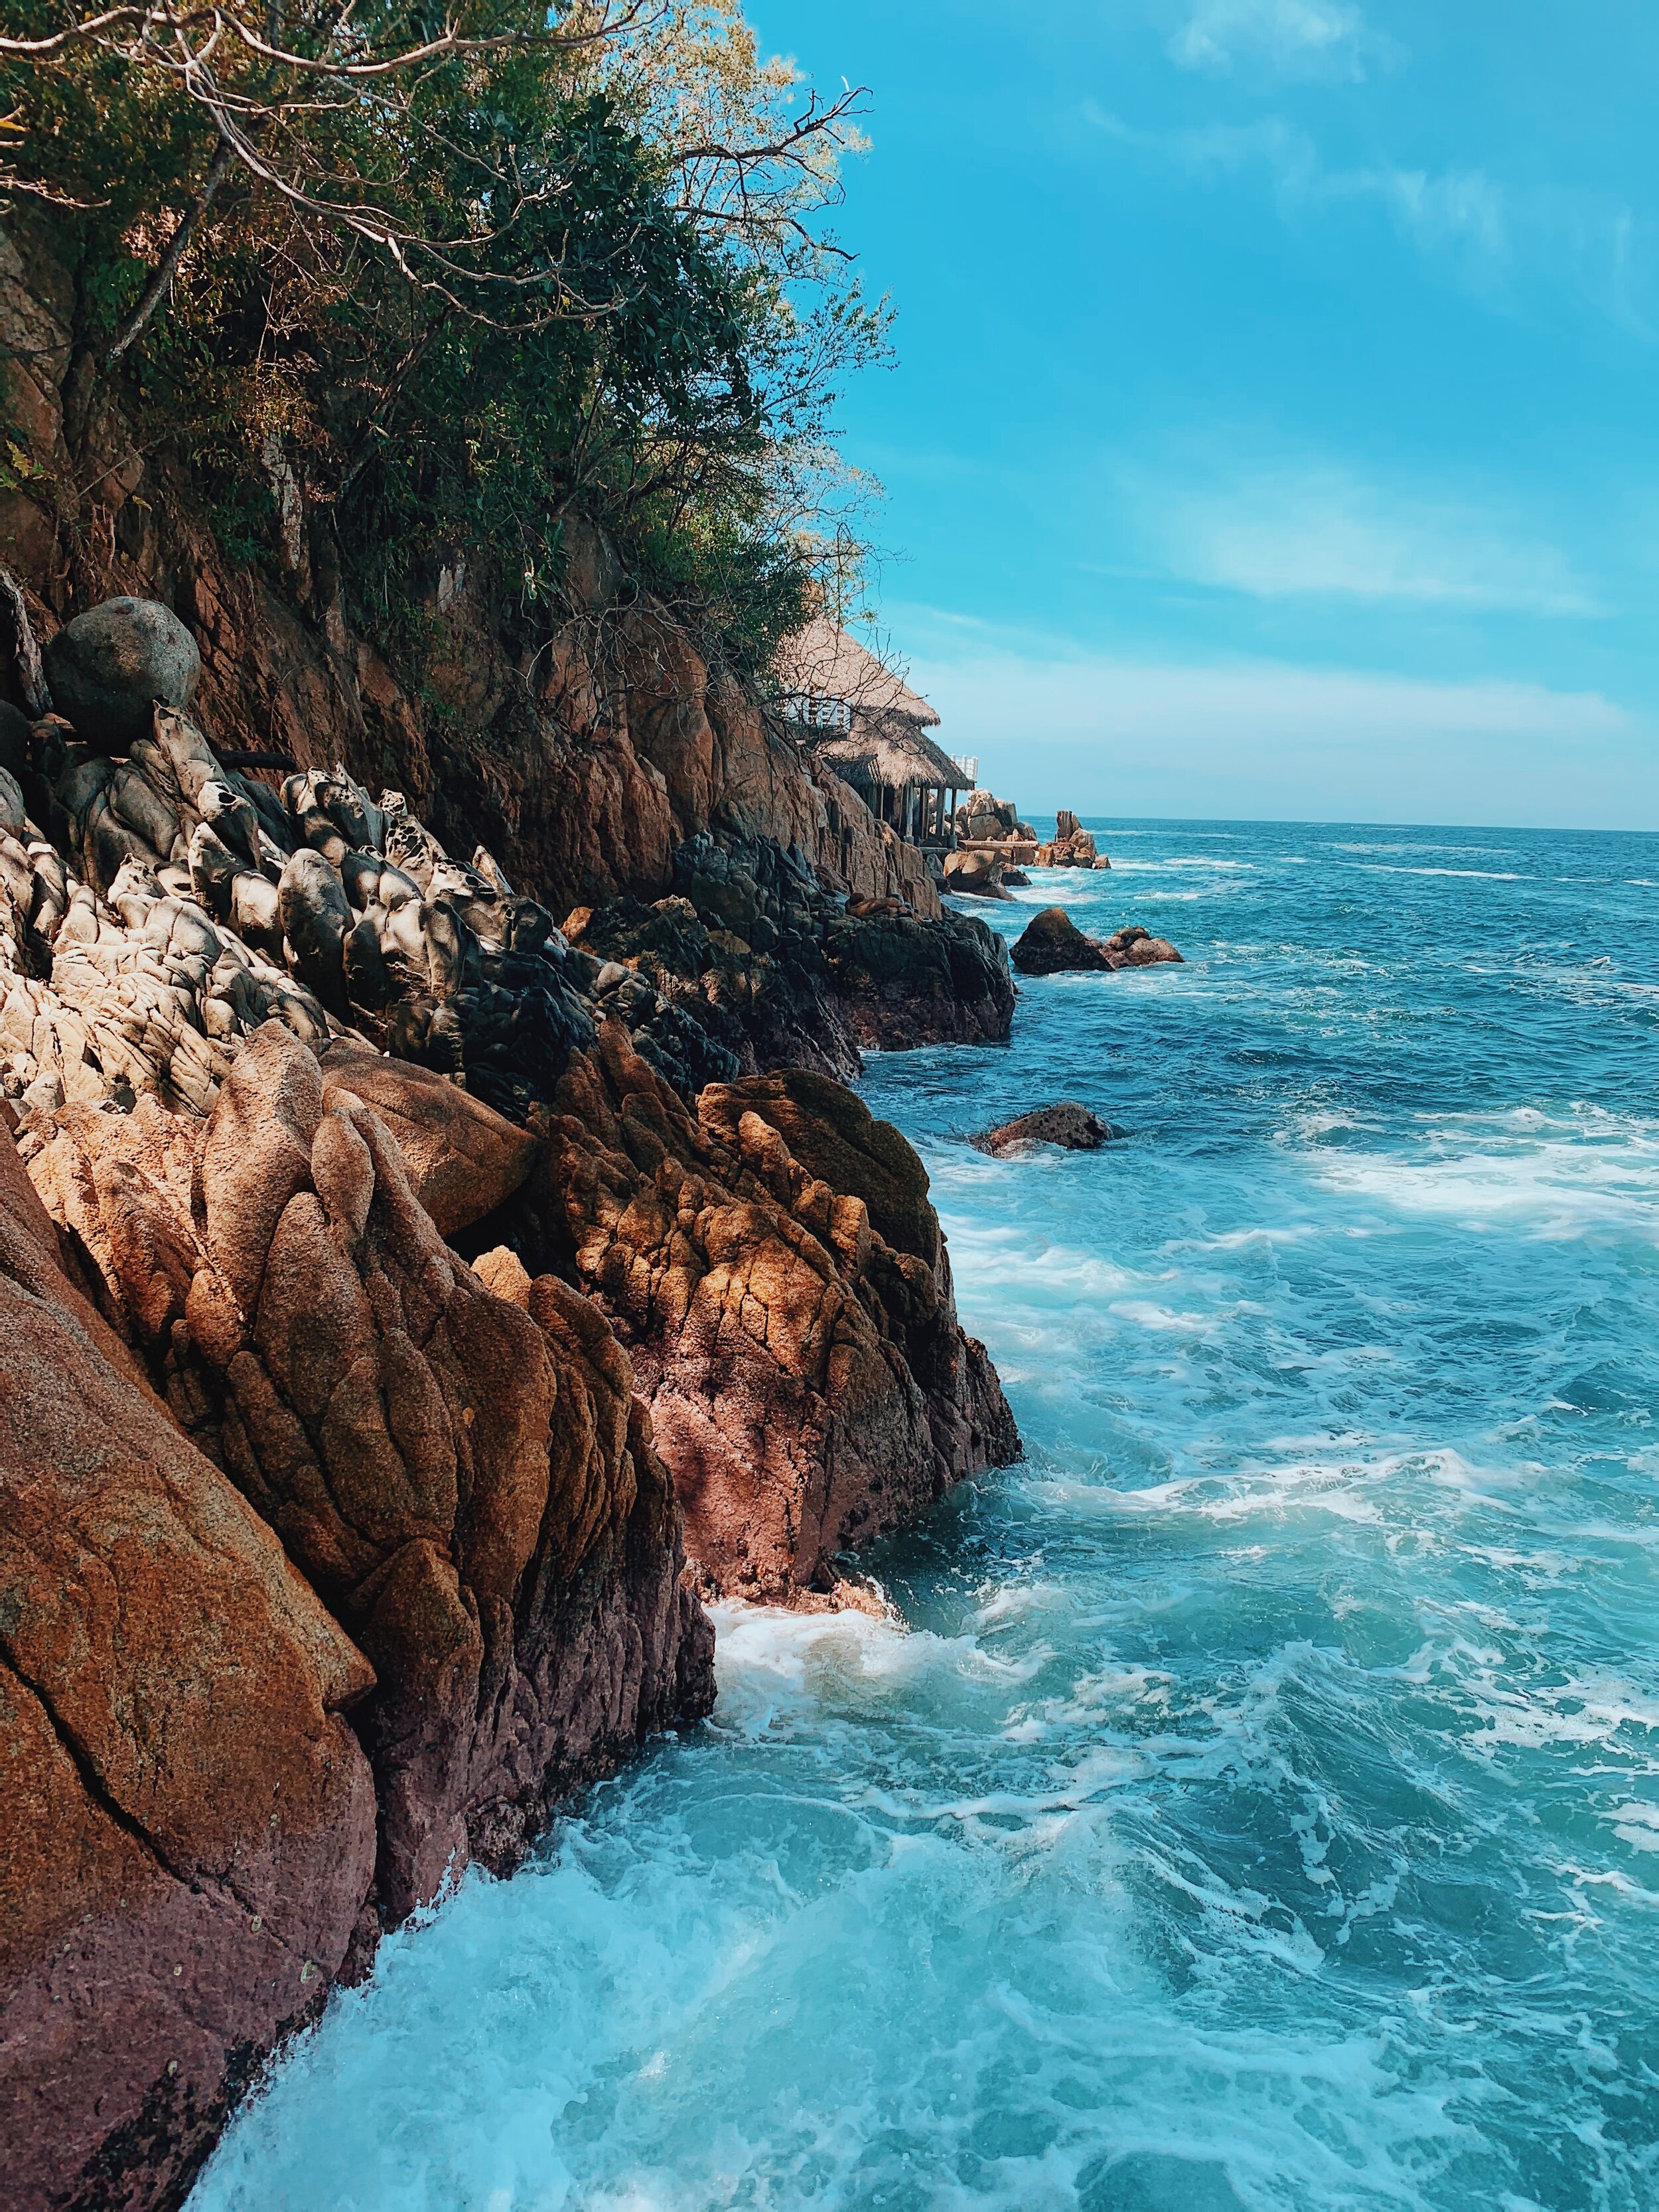 The coastline of Boca de Tomatlan along the trail to Colomitos Cove.JPG